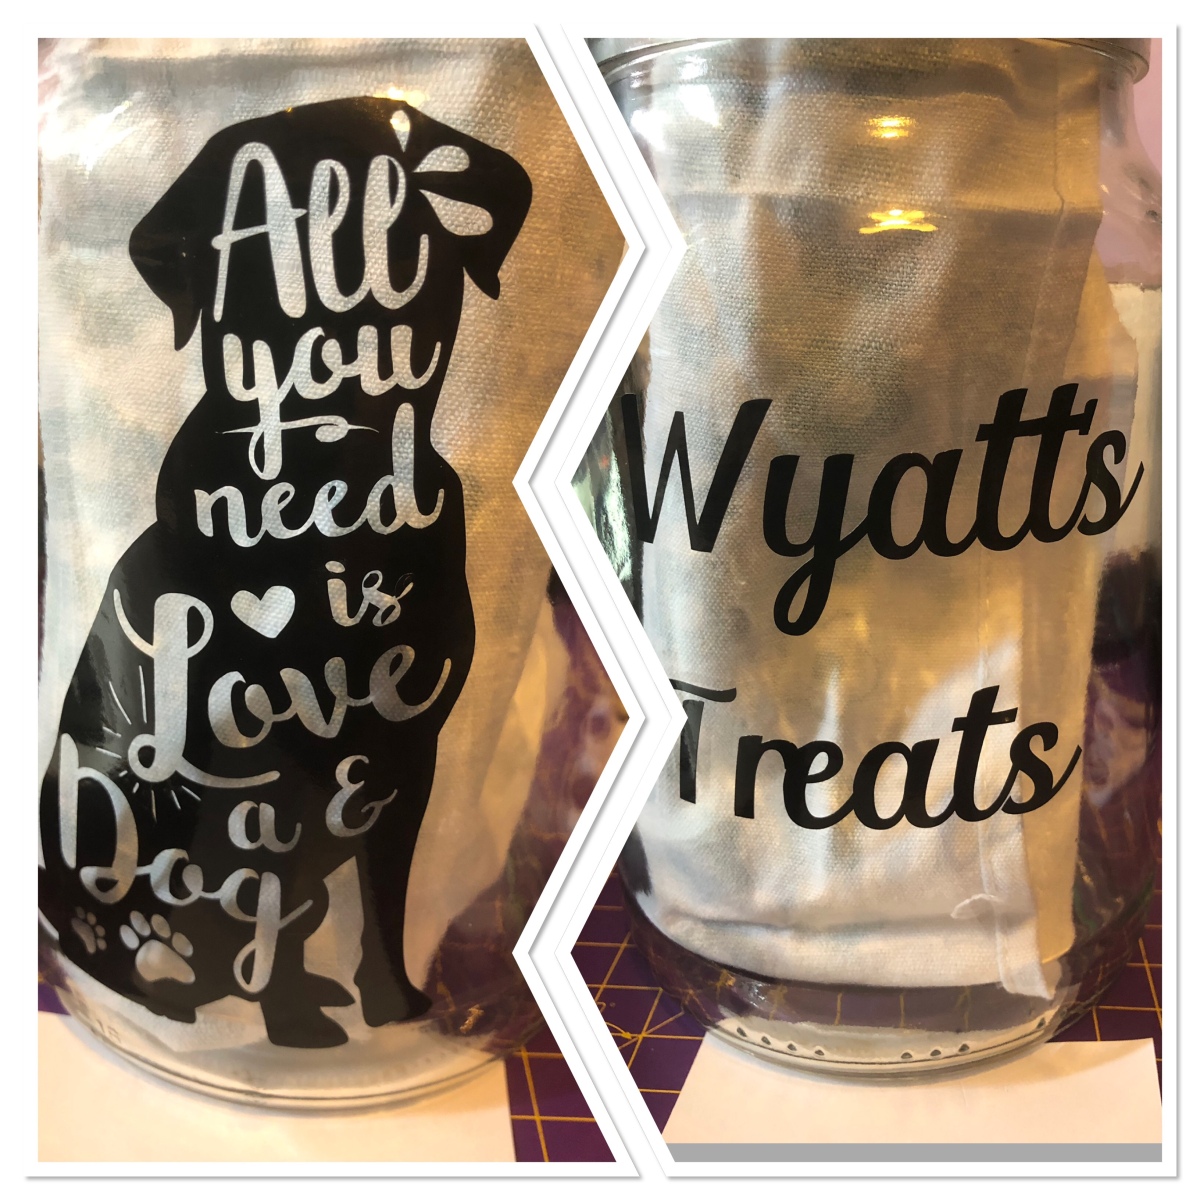 Wyatt’s treat jar